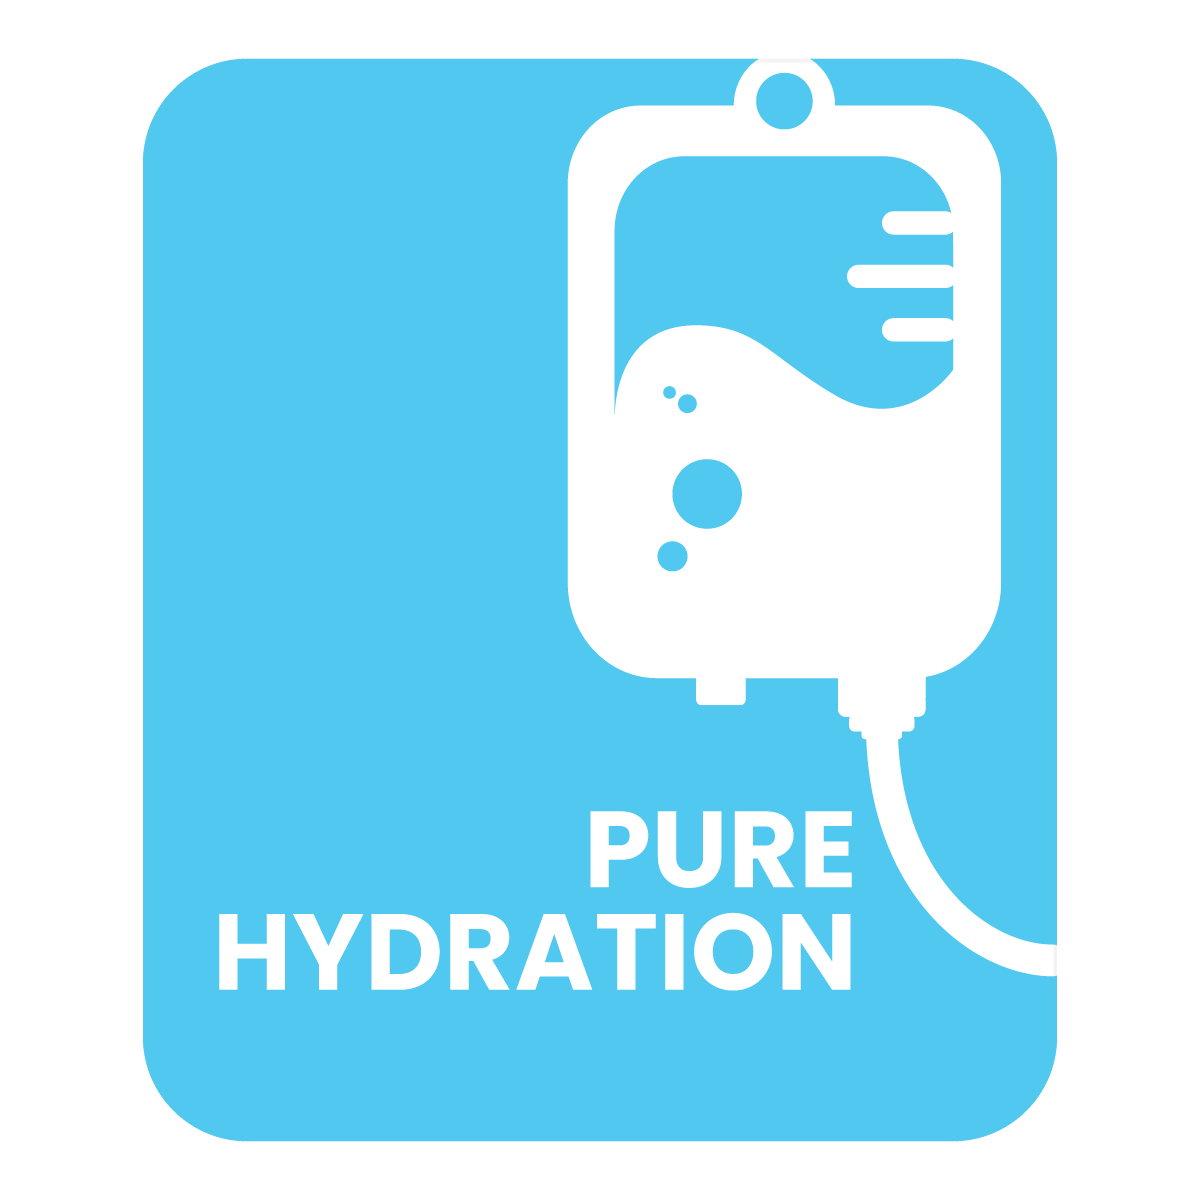 Pure Hydration